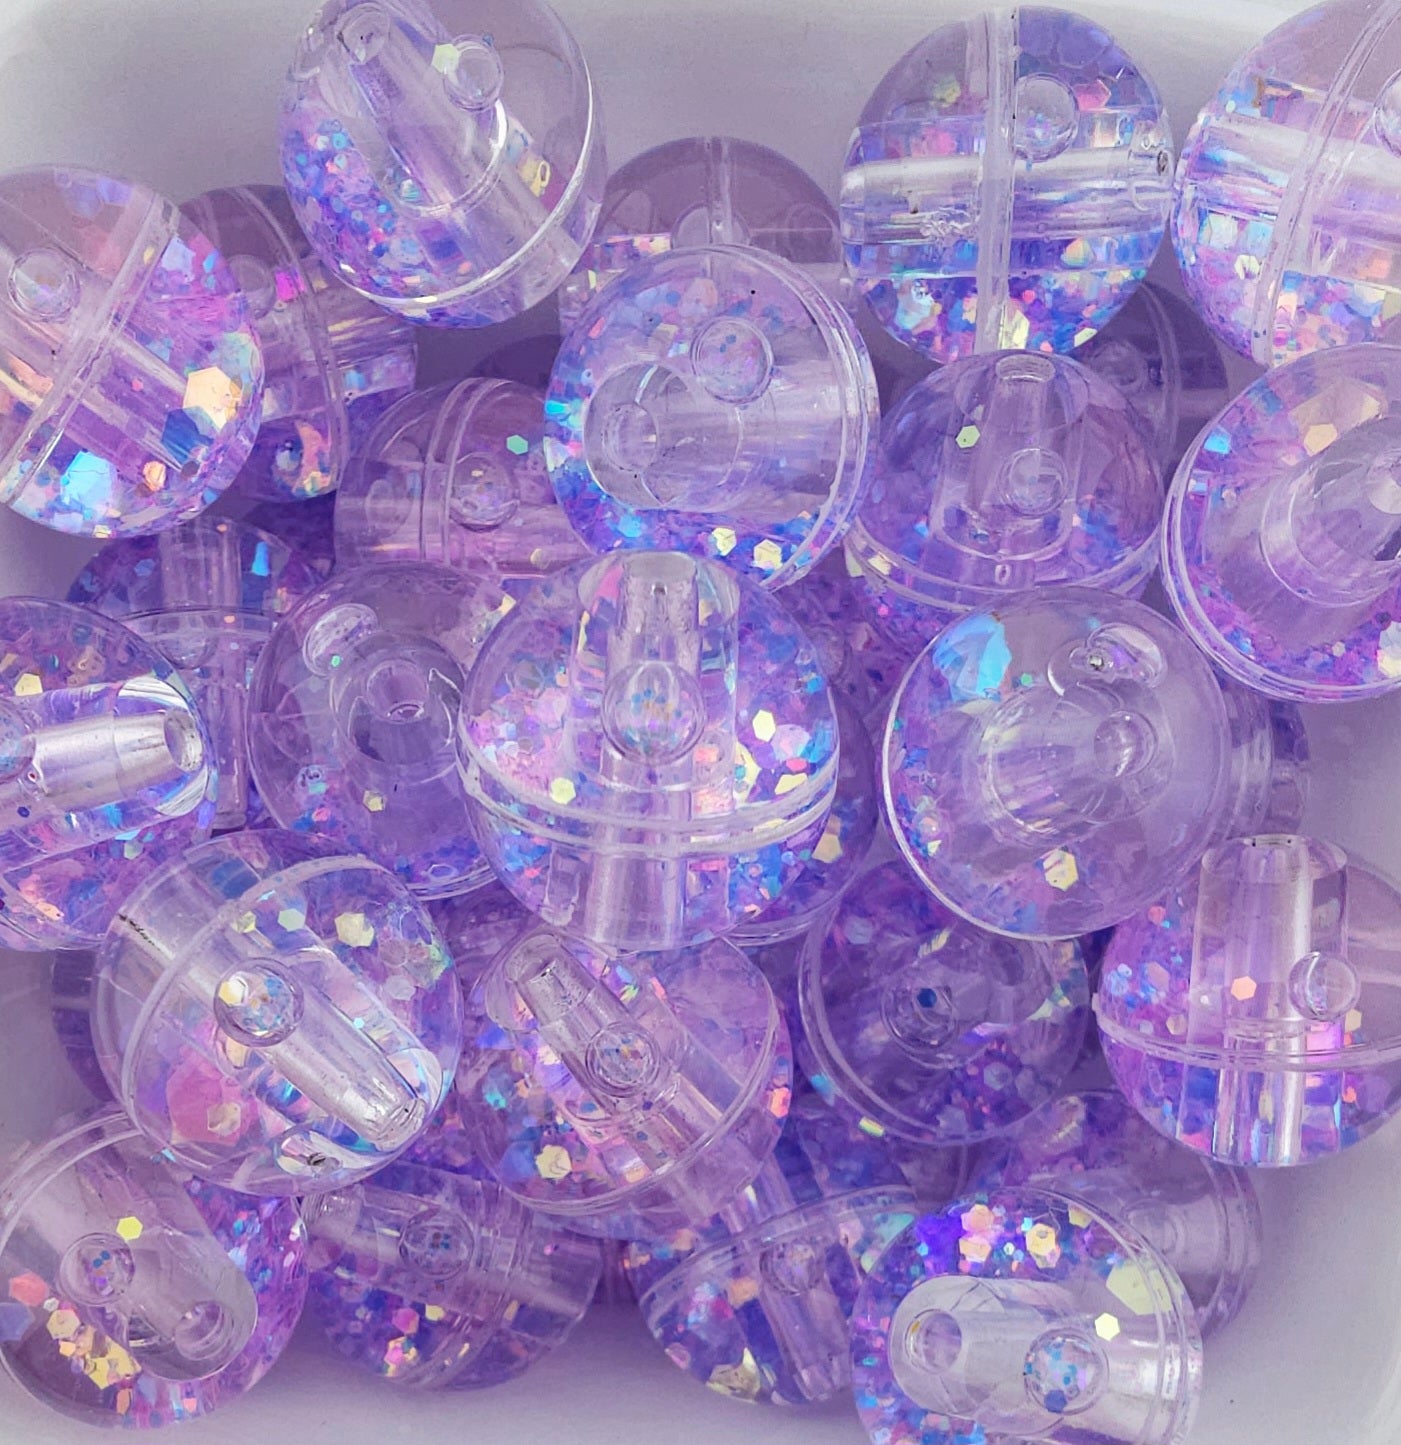 16mm Liquid Glitter Acrylic Round Beads